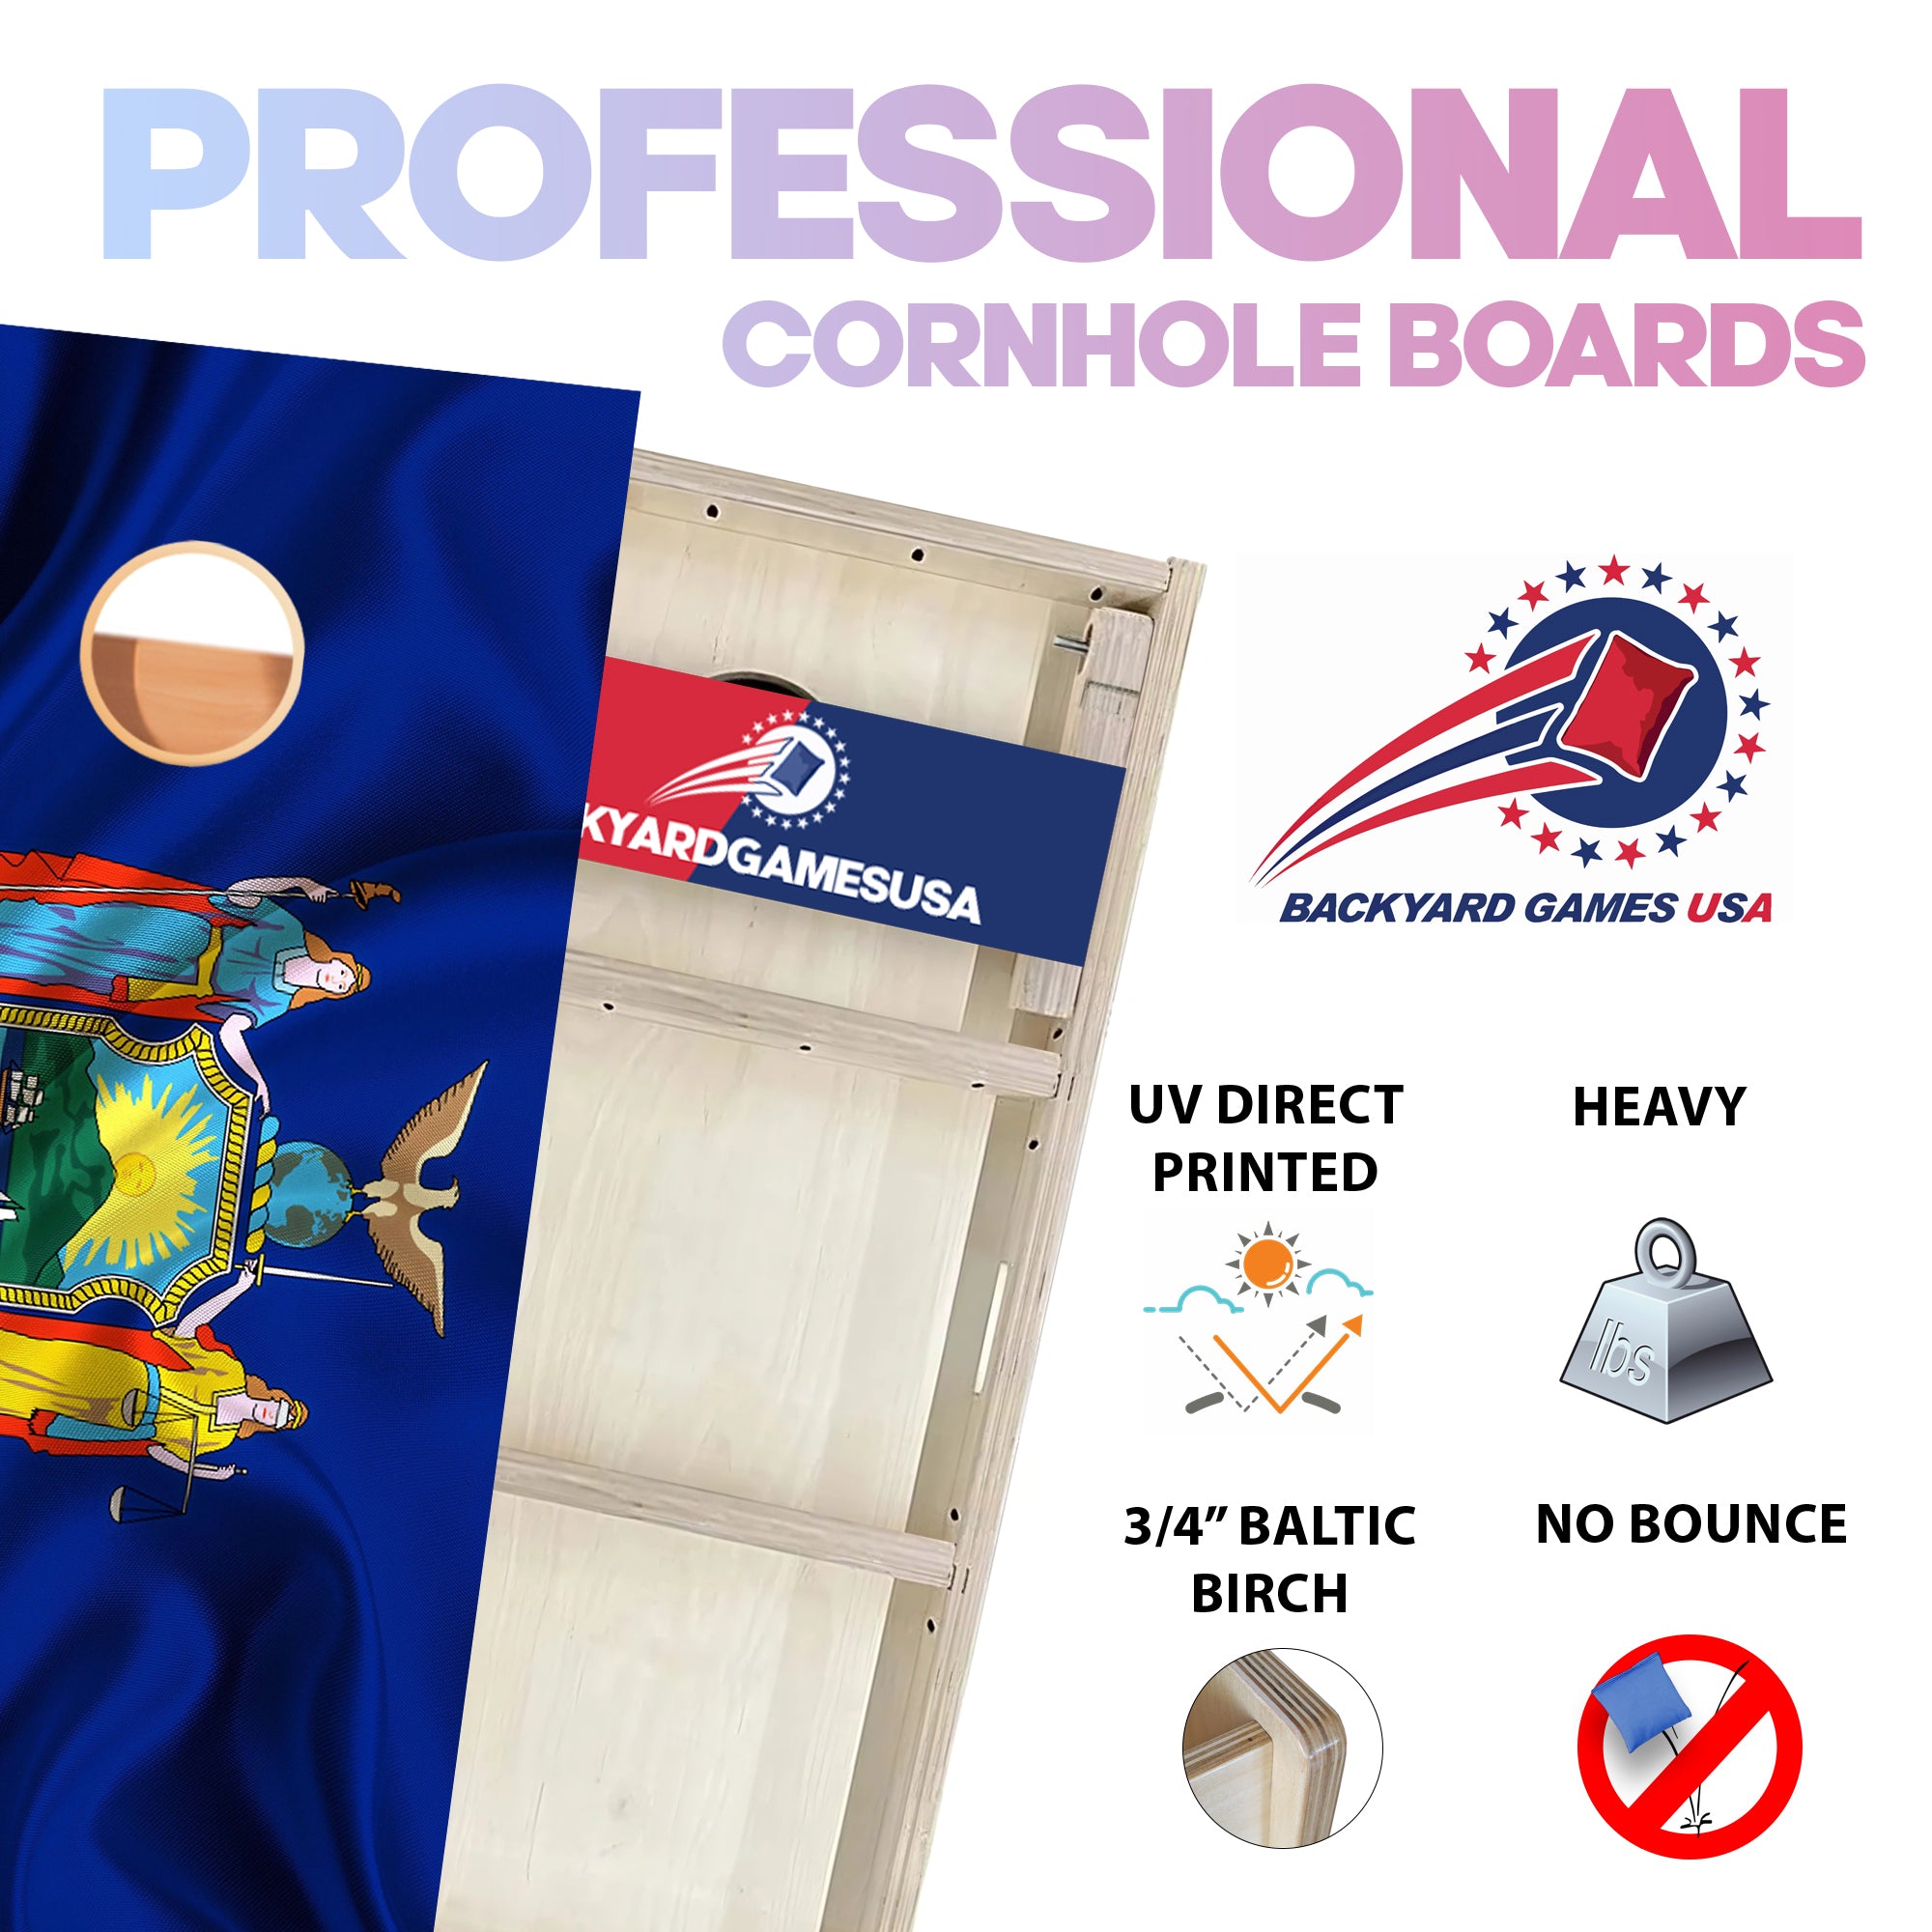 New York Professional Cornhole Boards